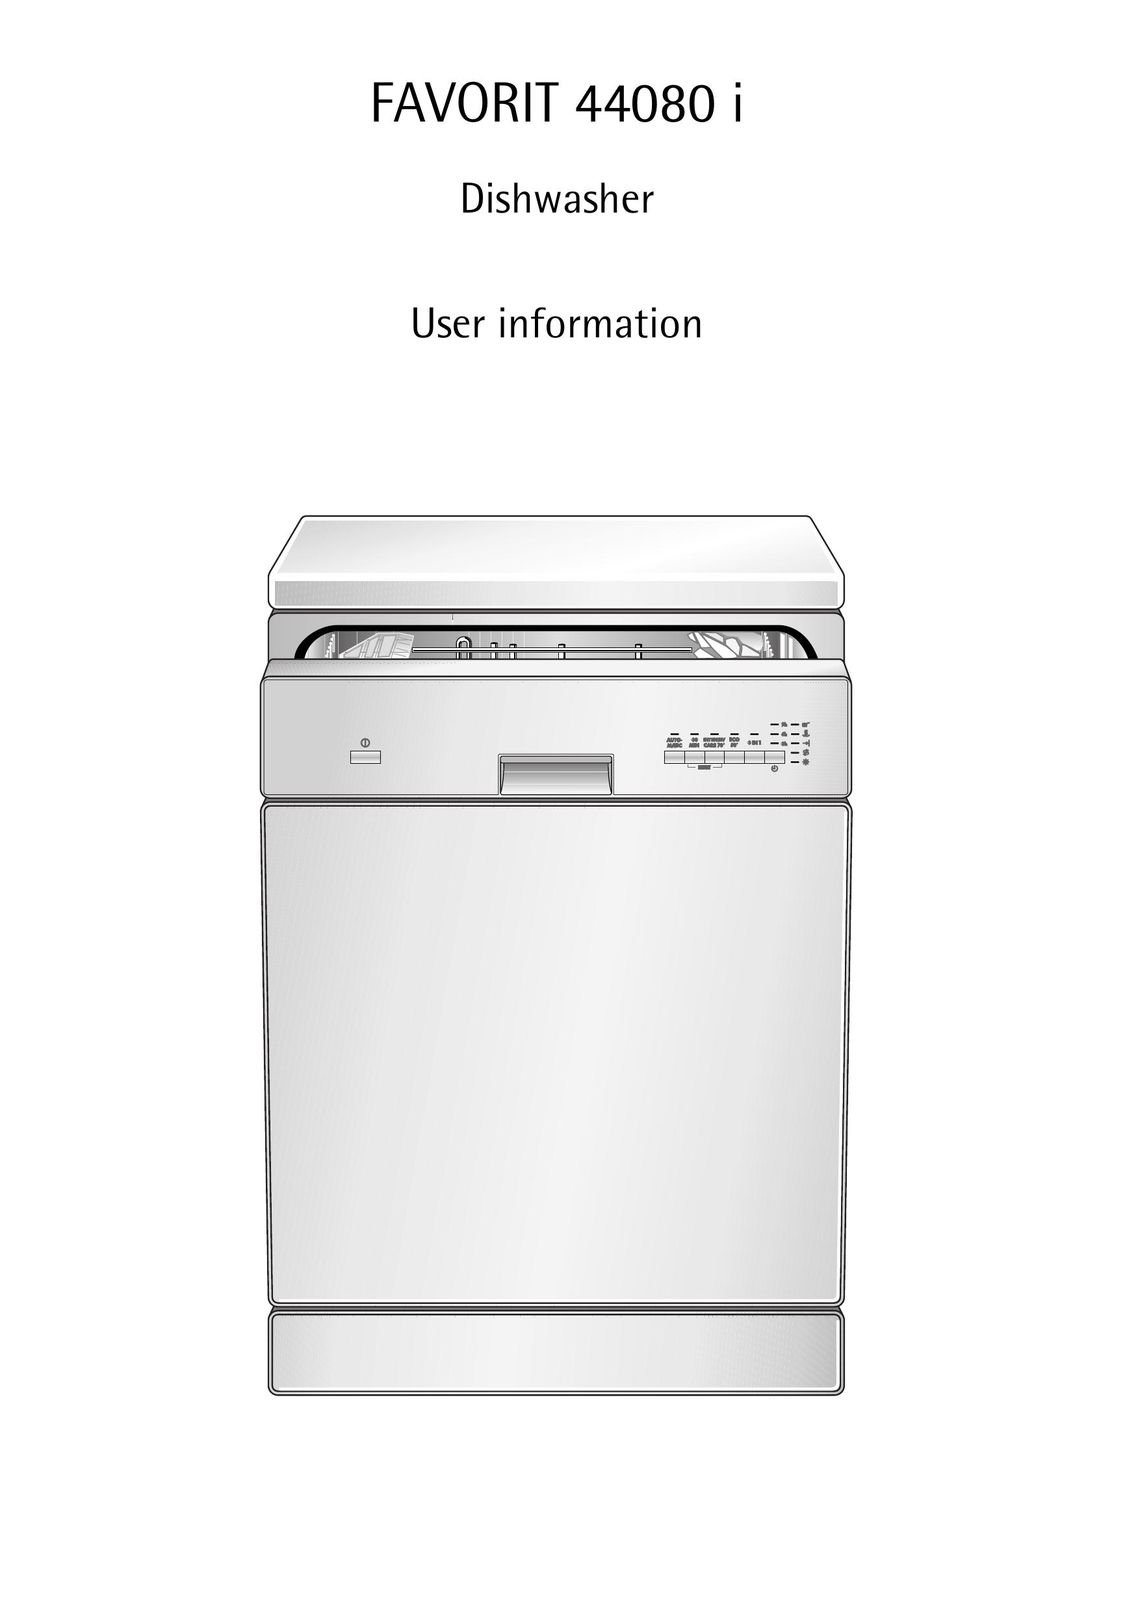 AEG 44080 I Dishwasher User Manual